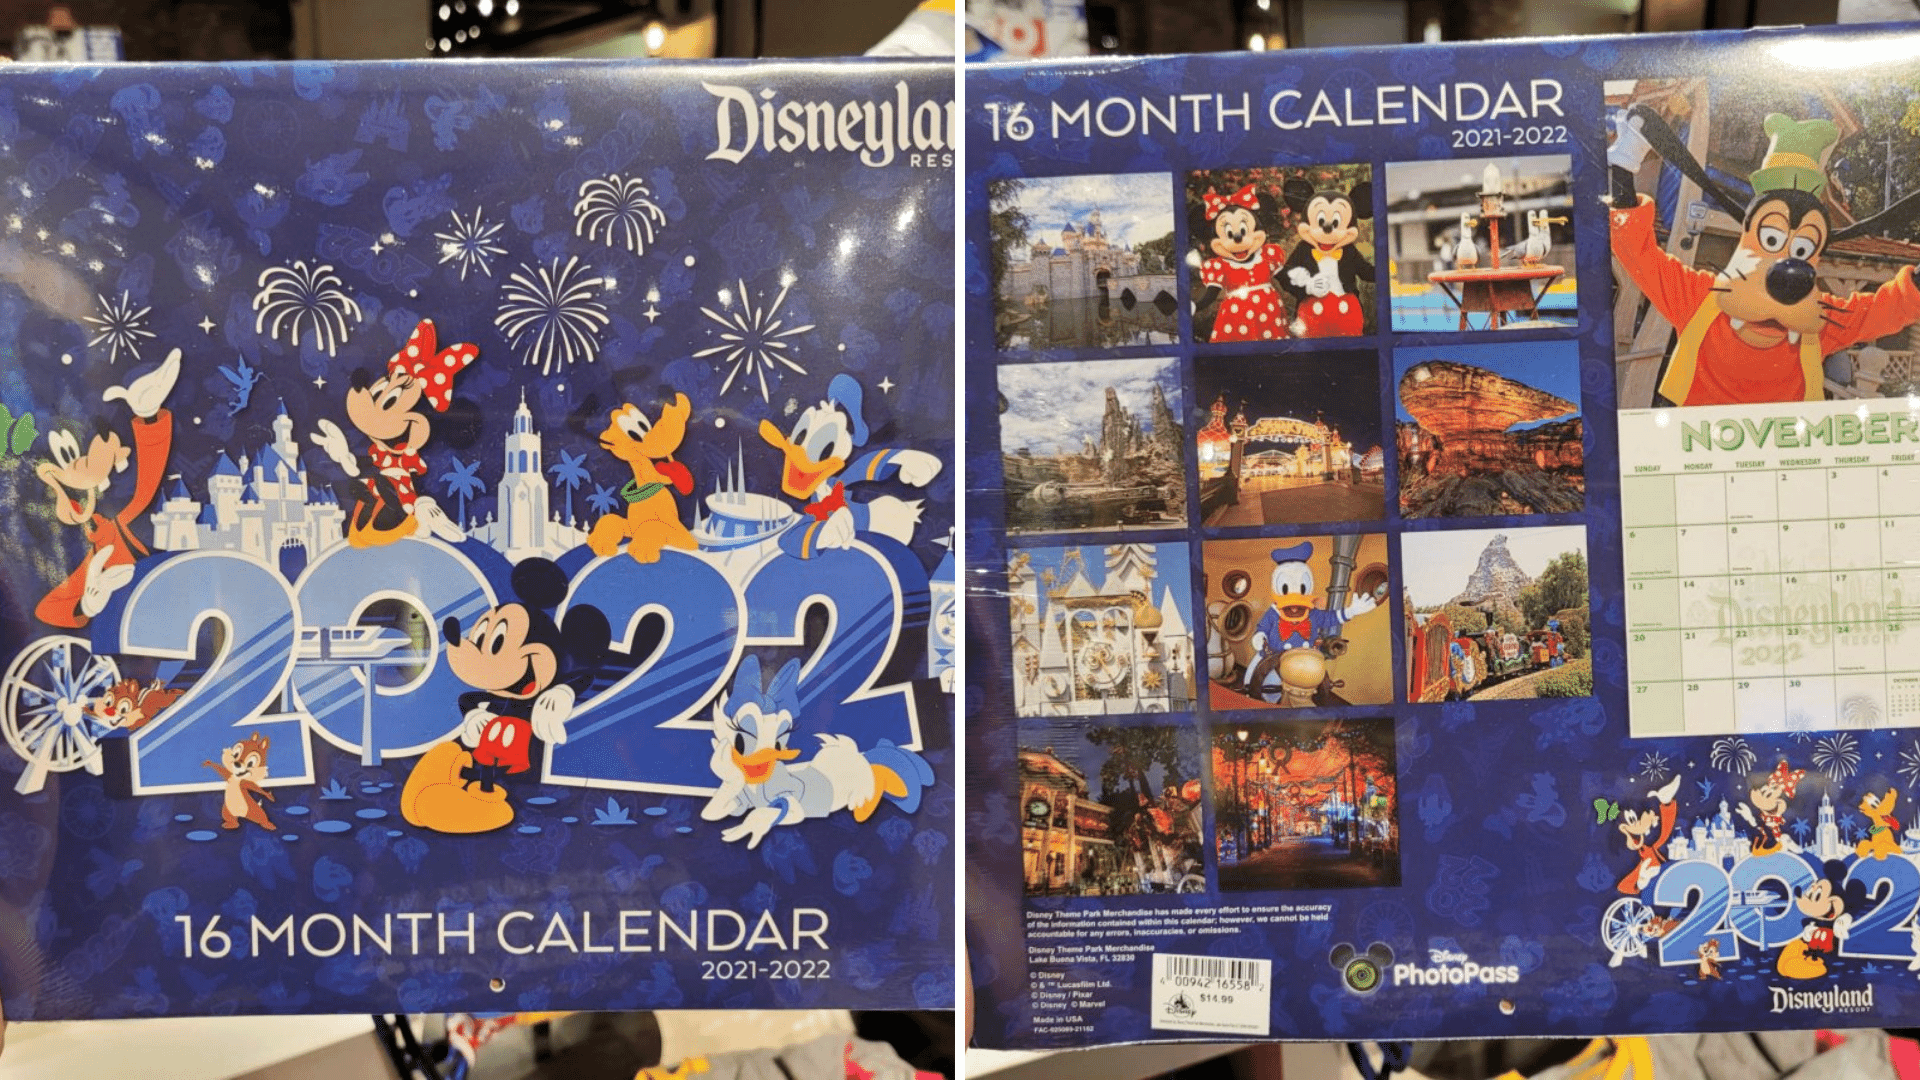 Disney 2022 Calendar Photos: 2022 Disneyland Resort 16 Month Calendar Arrives At World Of Disney  Store In Downtown Disney District - Disneyland News Today